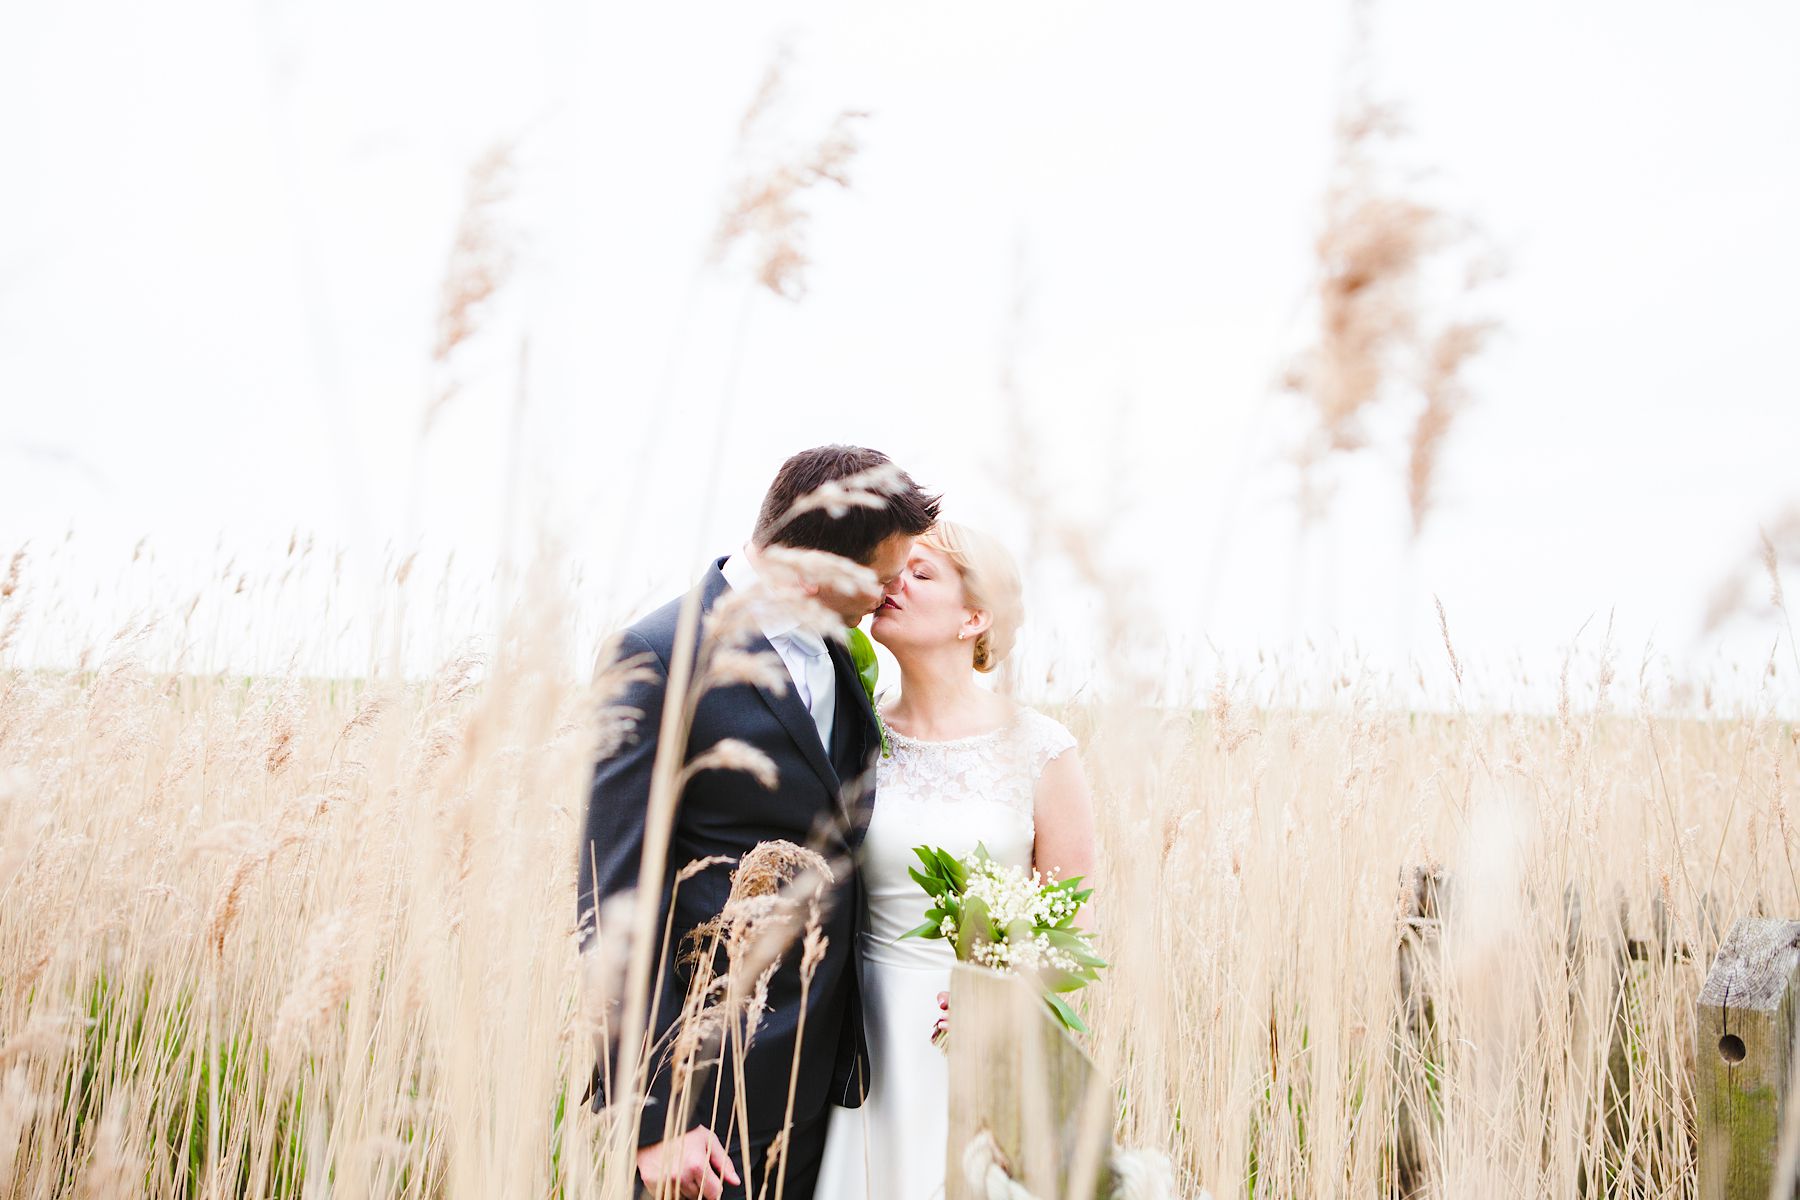 Cley windmill_North Norfolk, Norwich_wedding photography_small intimate wedding venues_windmill wedding_seaside wedding (19)